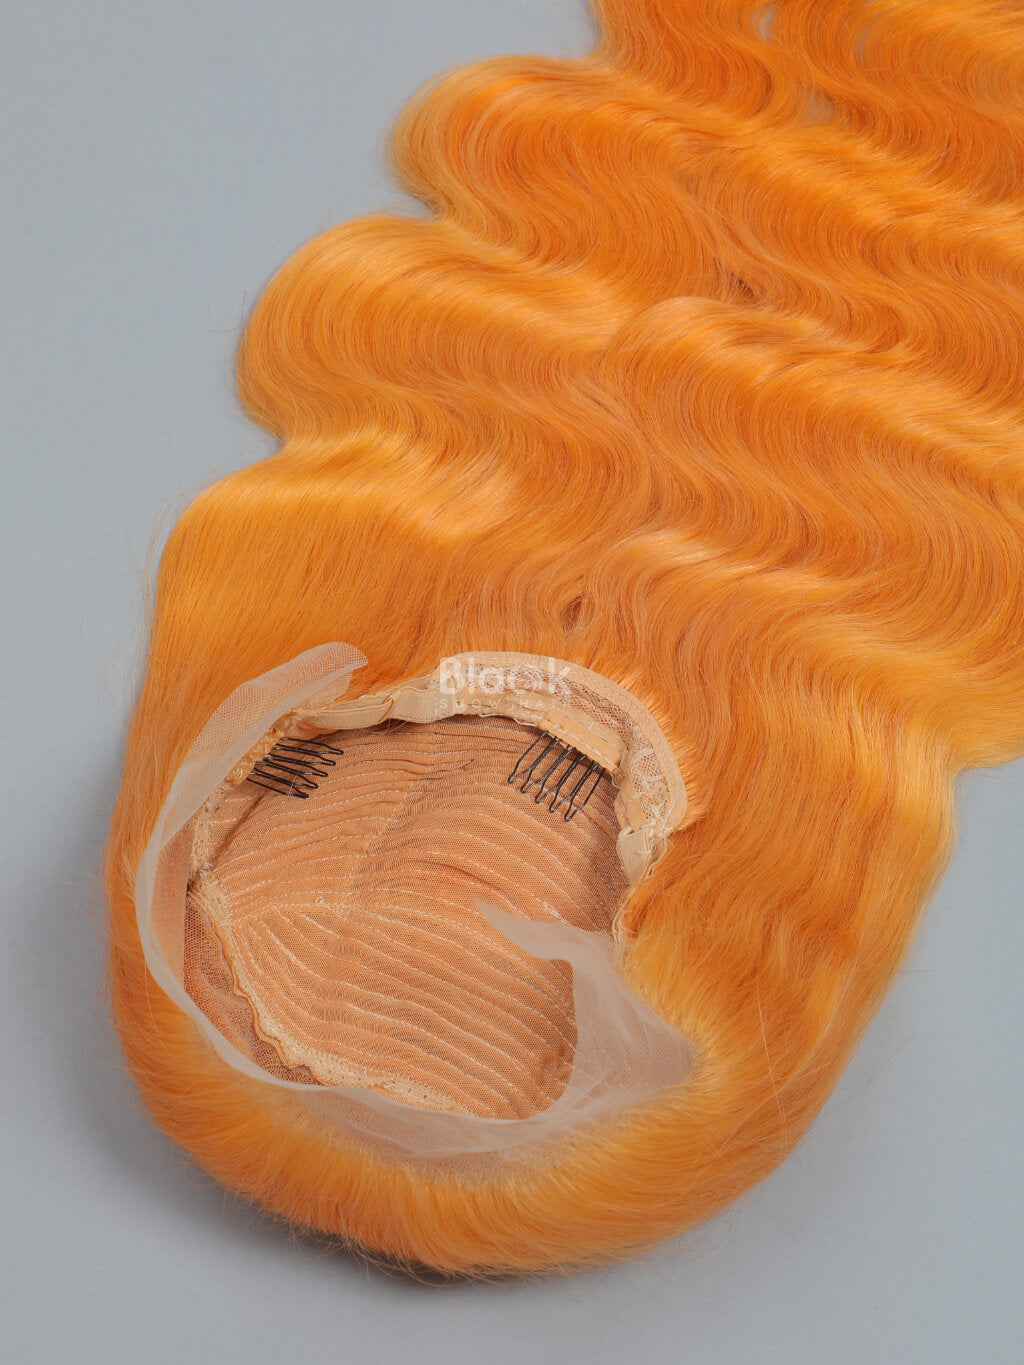 ginger orange 13x4 transparent lace frontal wig body wave 4